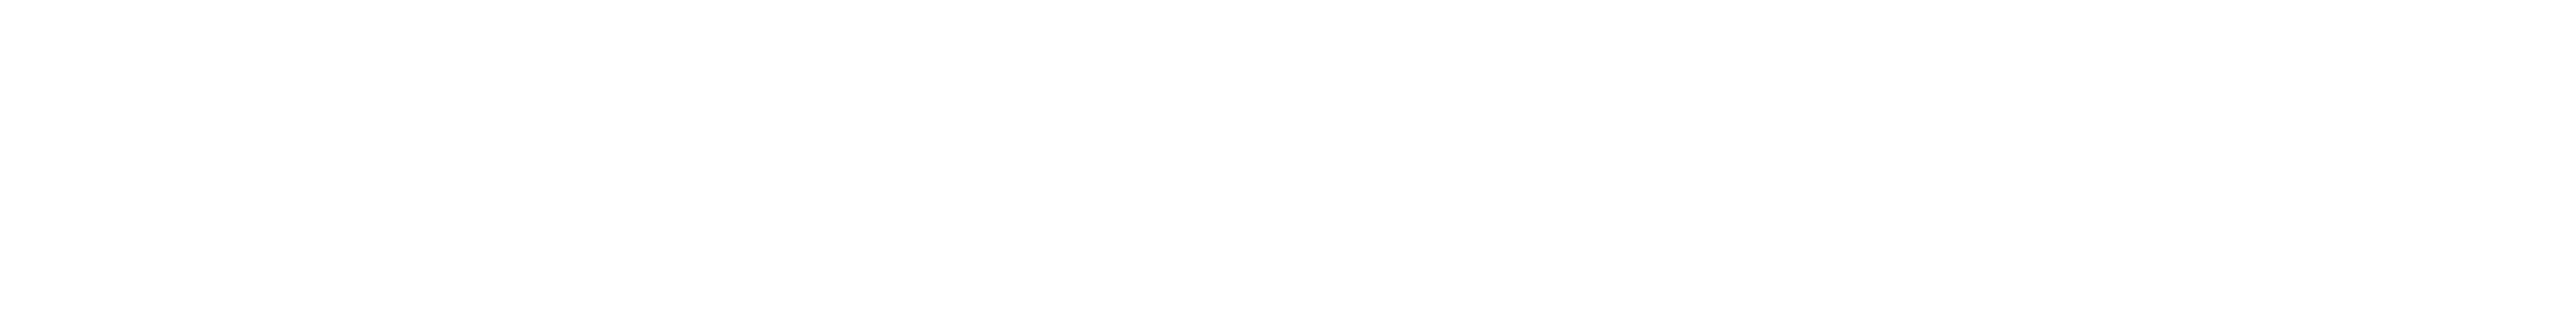 molecule white logo